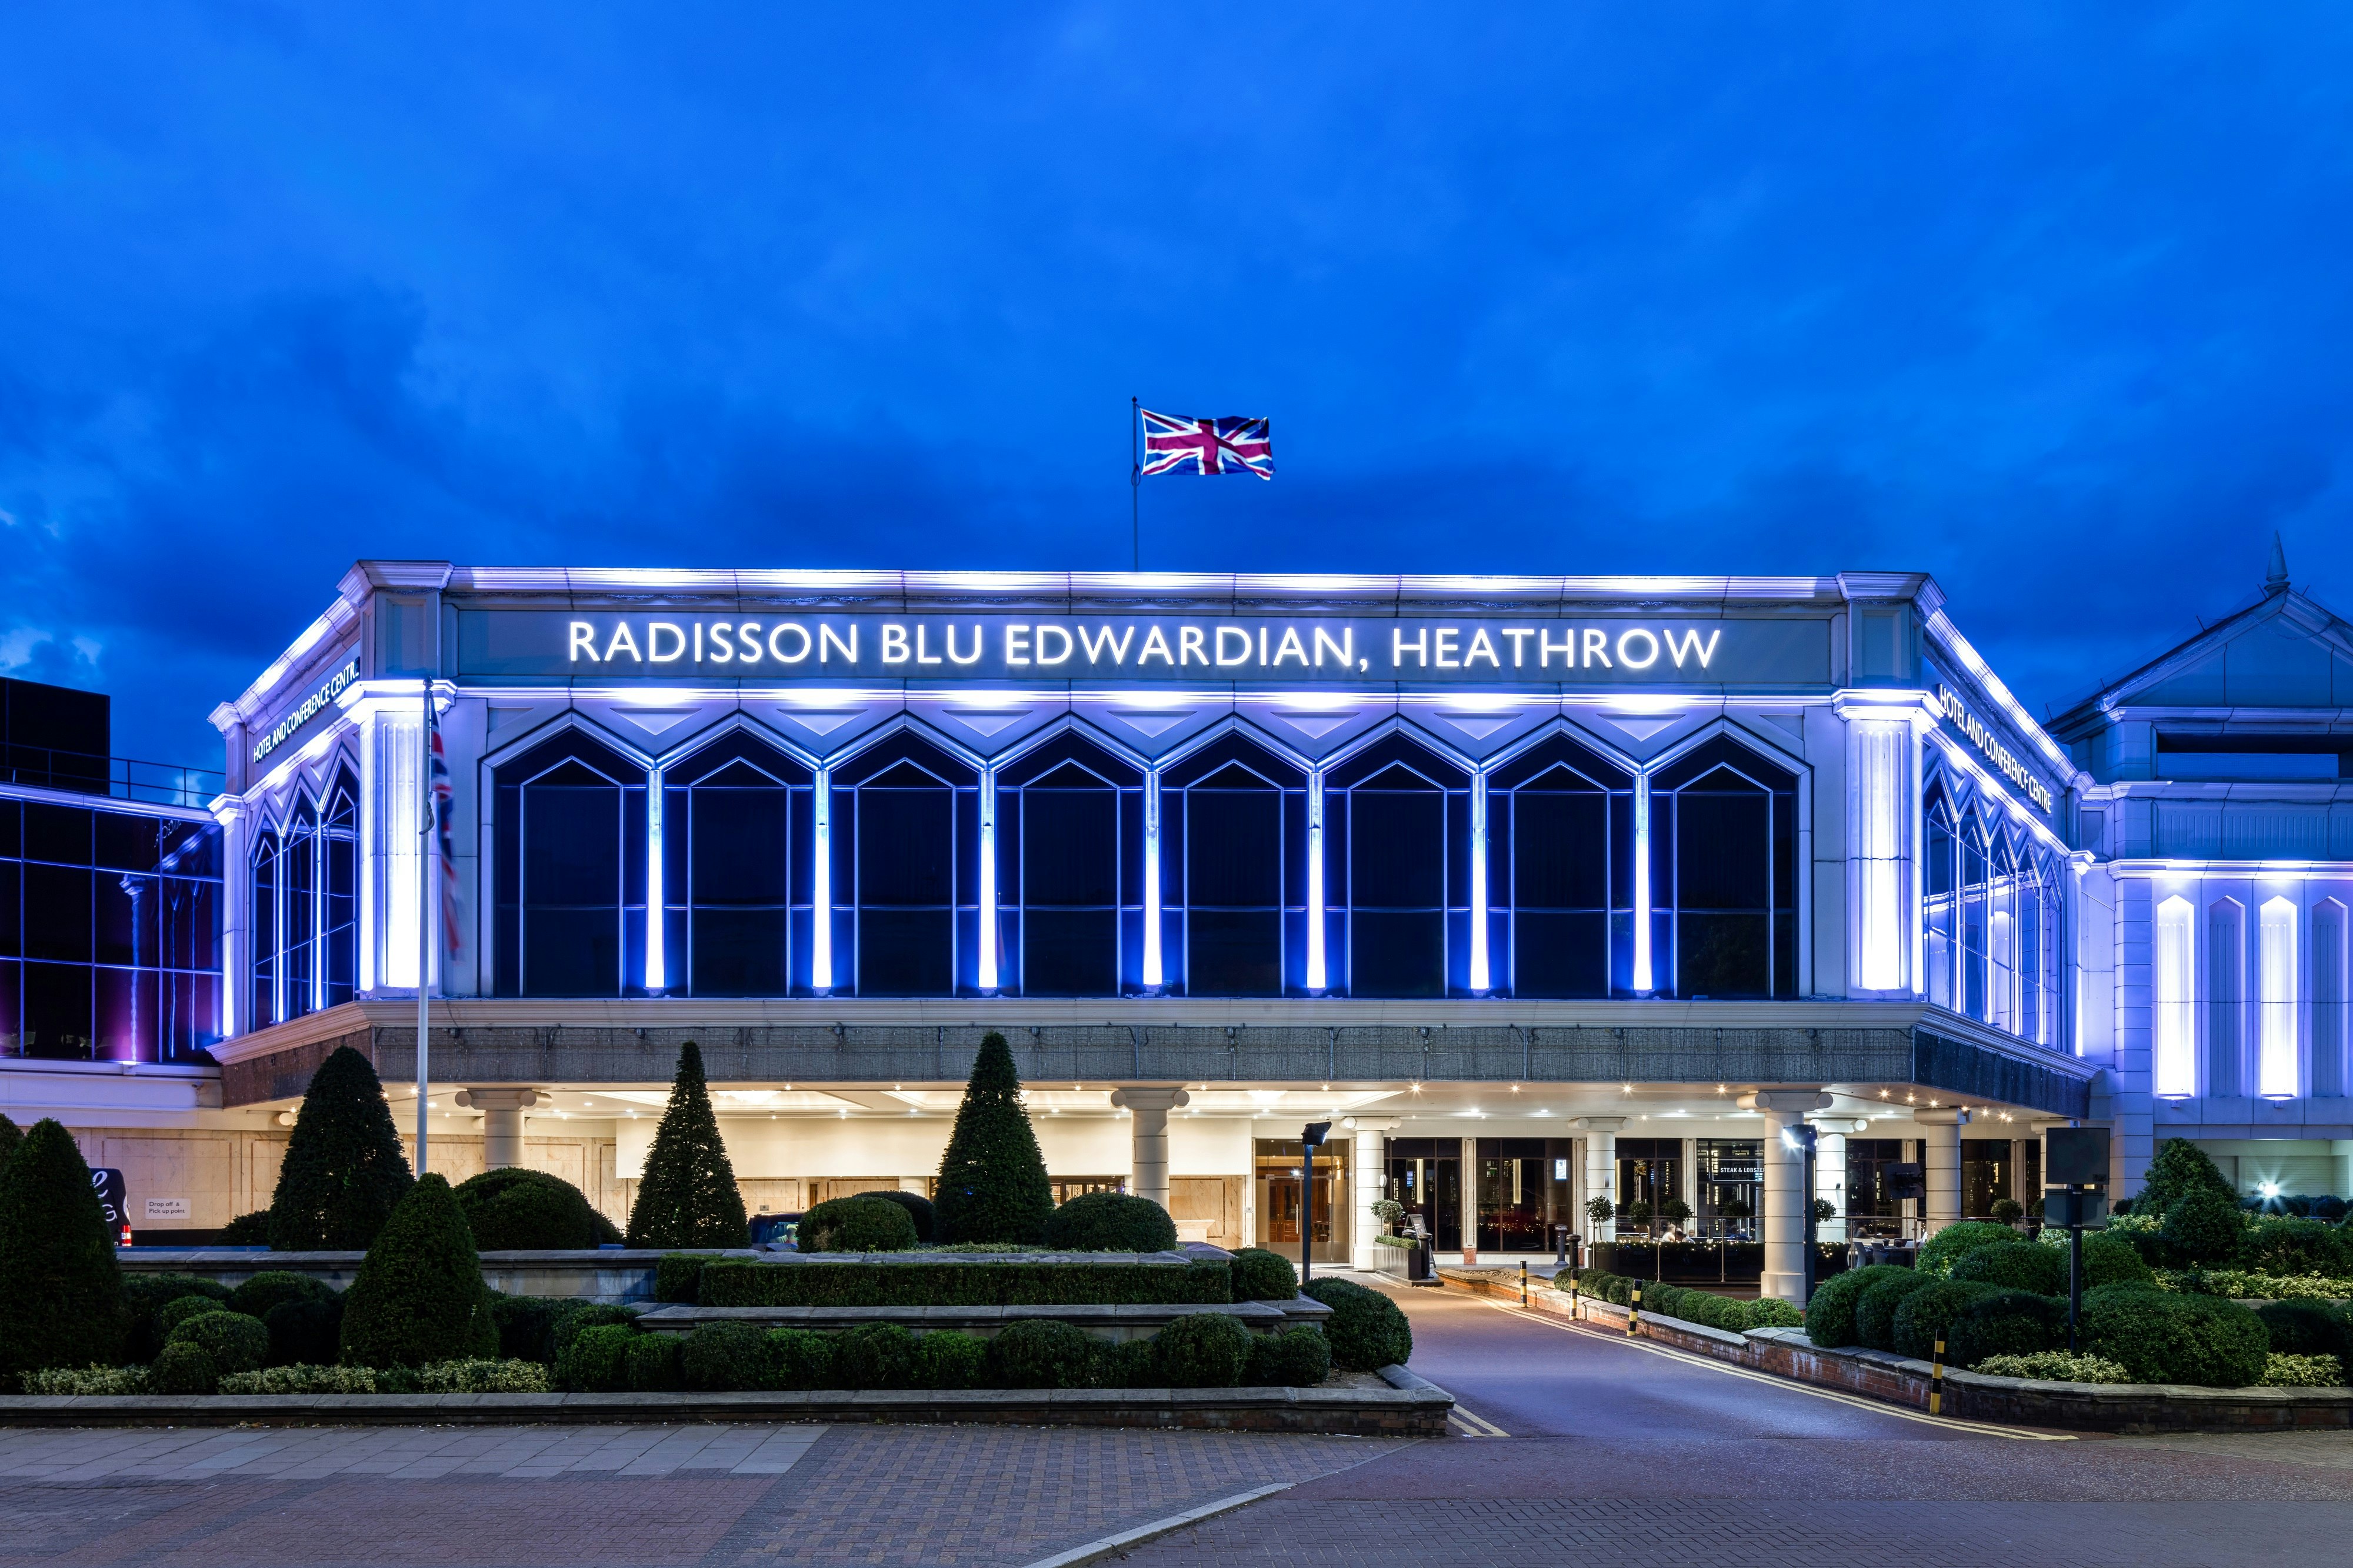 Radisson Blu Edwardian Heathrow - Brainbox image 5